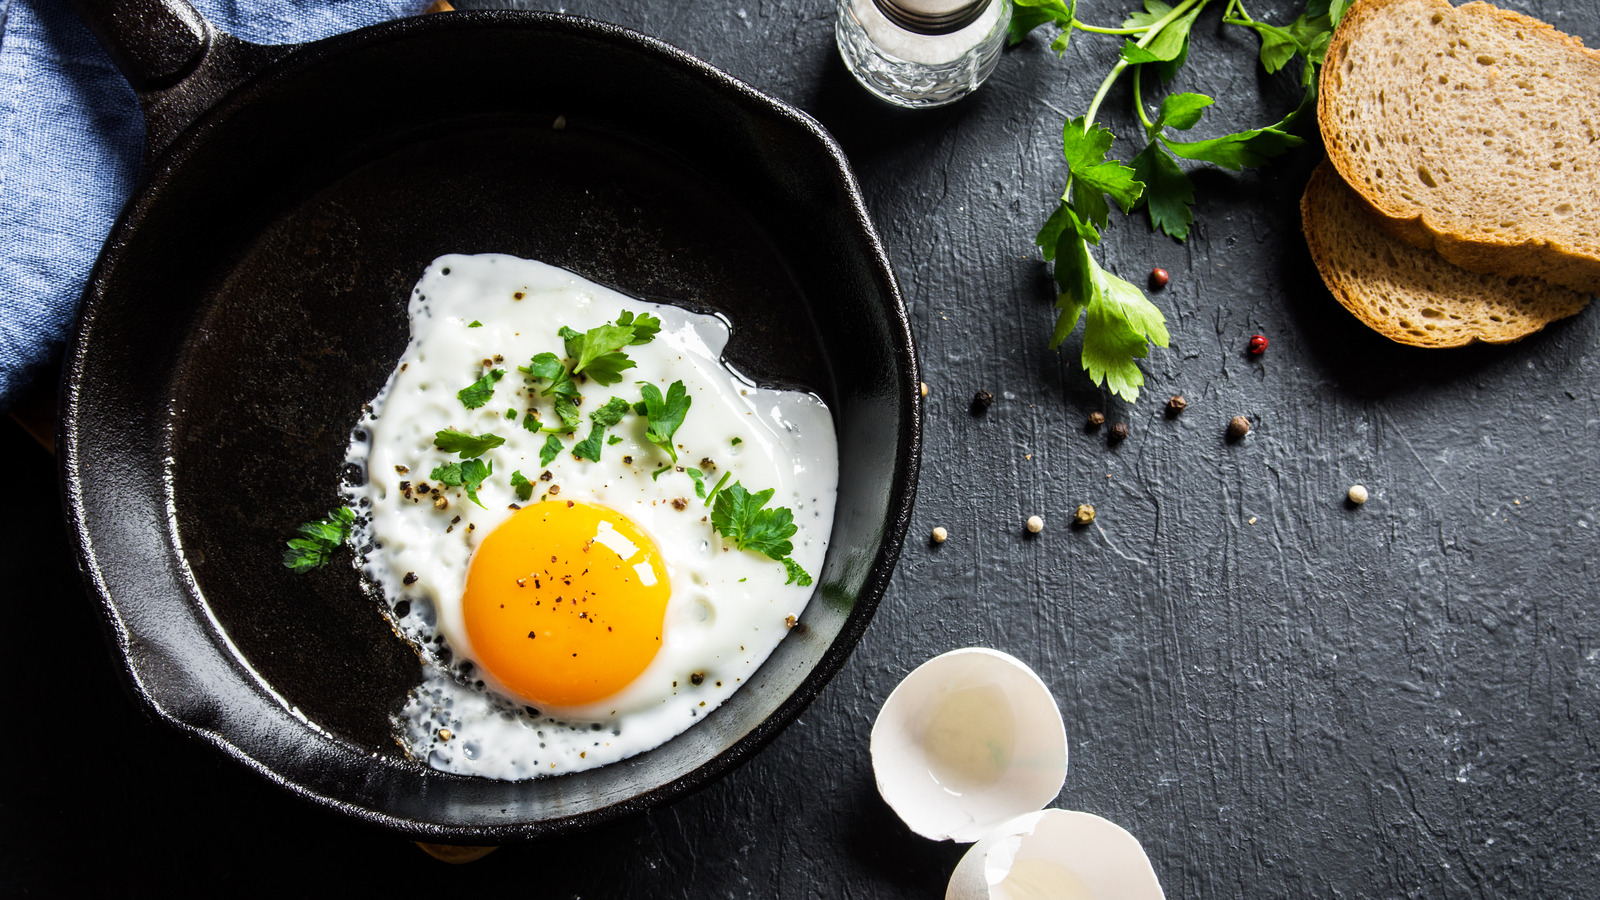 Cast-Iron Scrambled Eggs Recipe: How to Make It